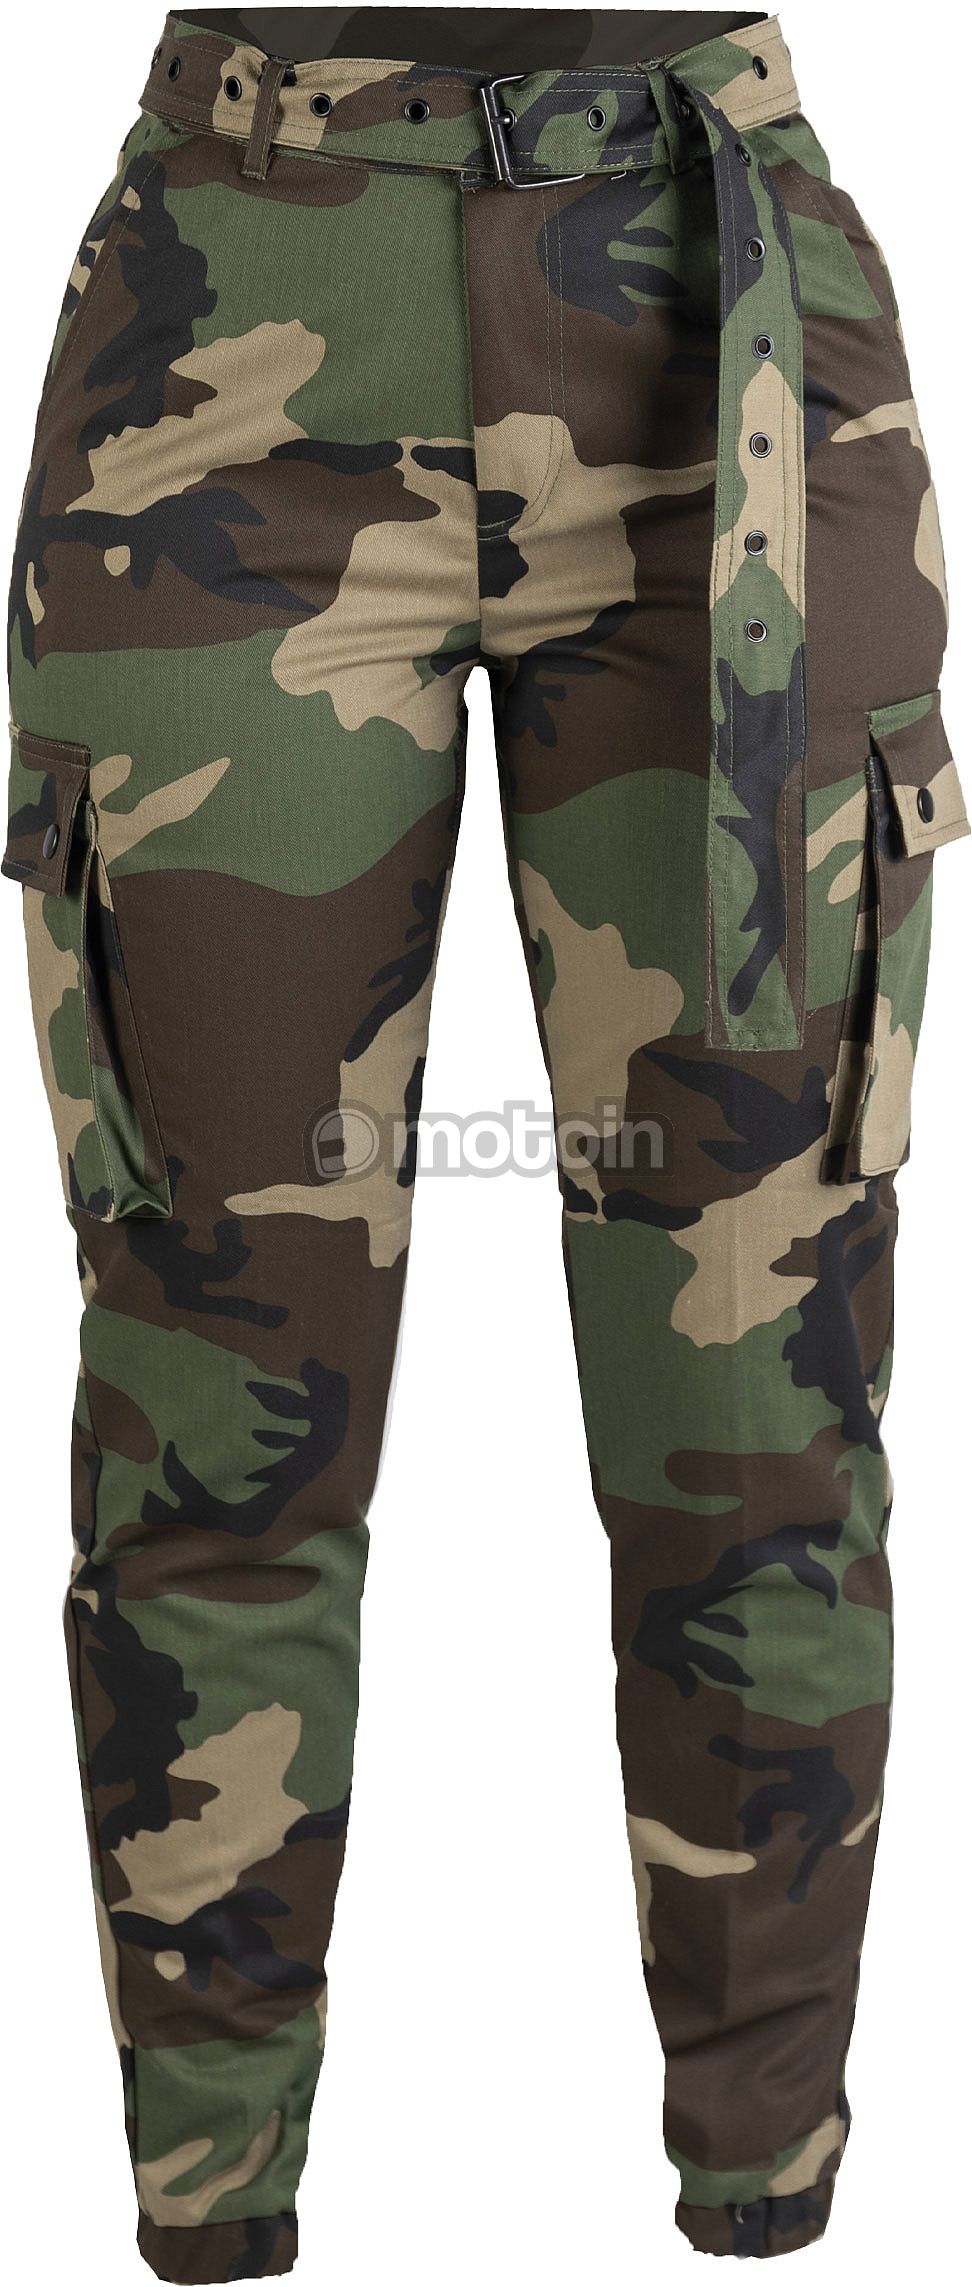 Kaufe Damen-Komfort-Kampf-Cargohose, Damen-Hose mit lockeren Armeetaschen